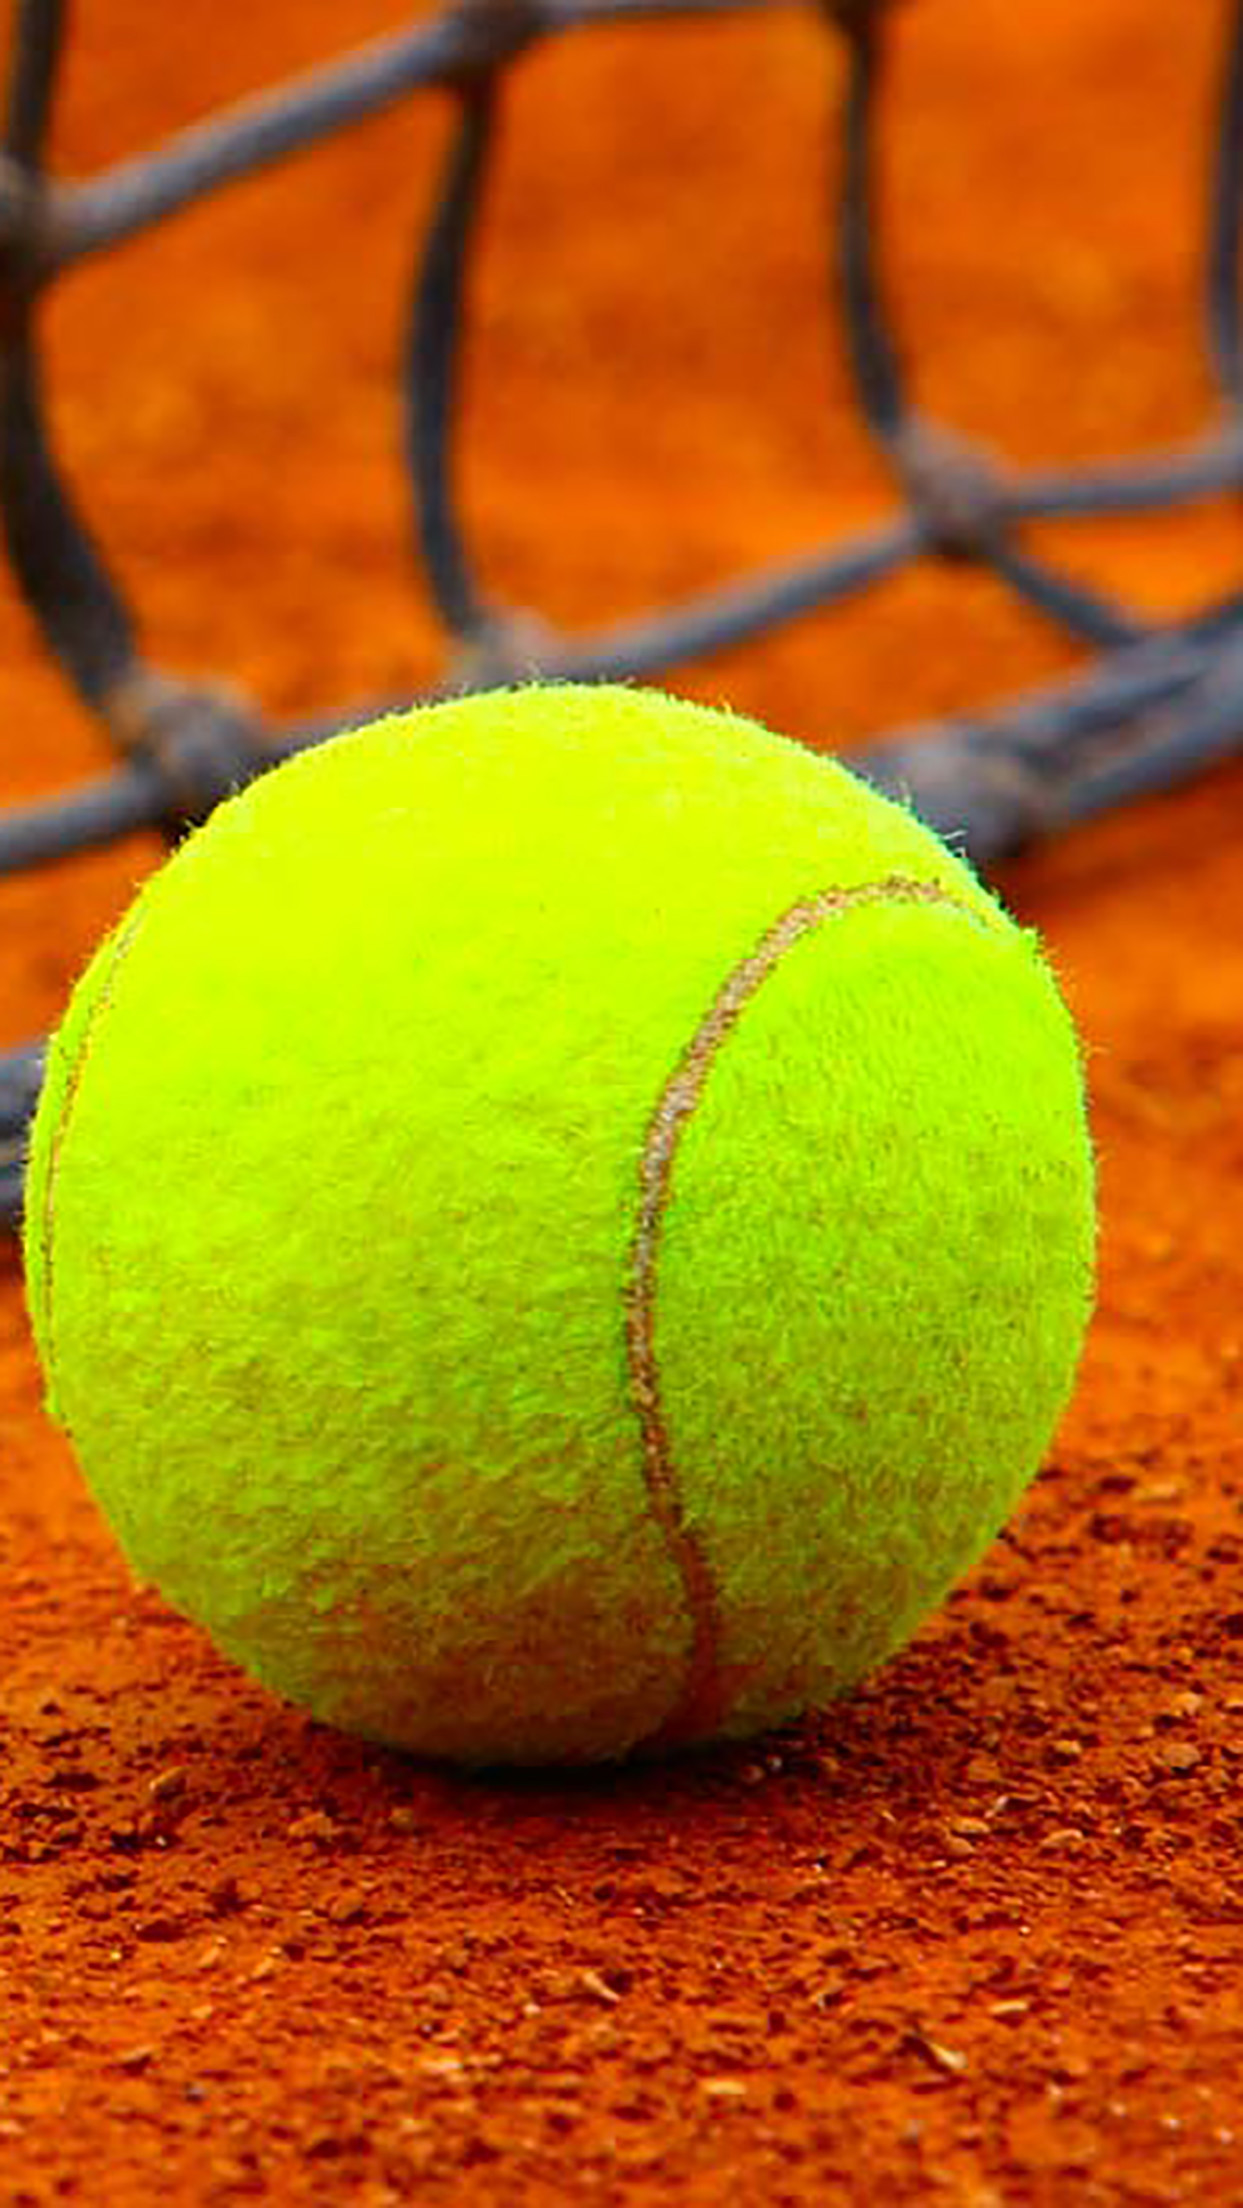 pelota de tenis,pelota de tenis,tenis,equipo deportivo,deporte de raqueta,deportes